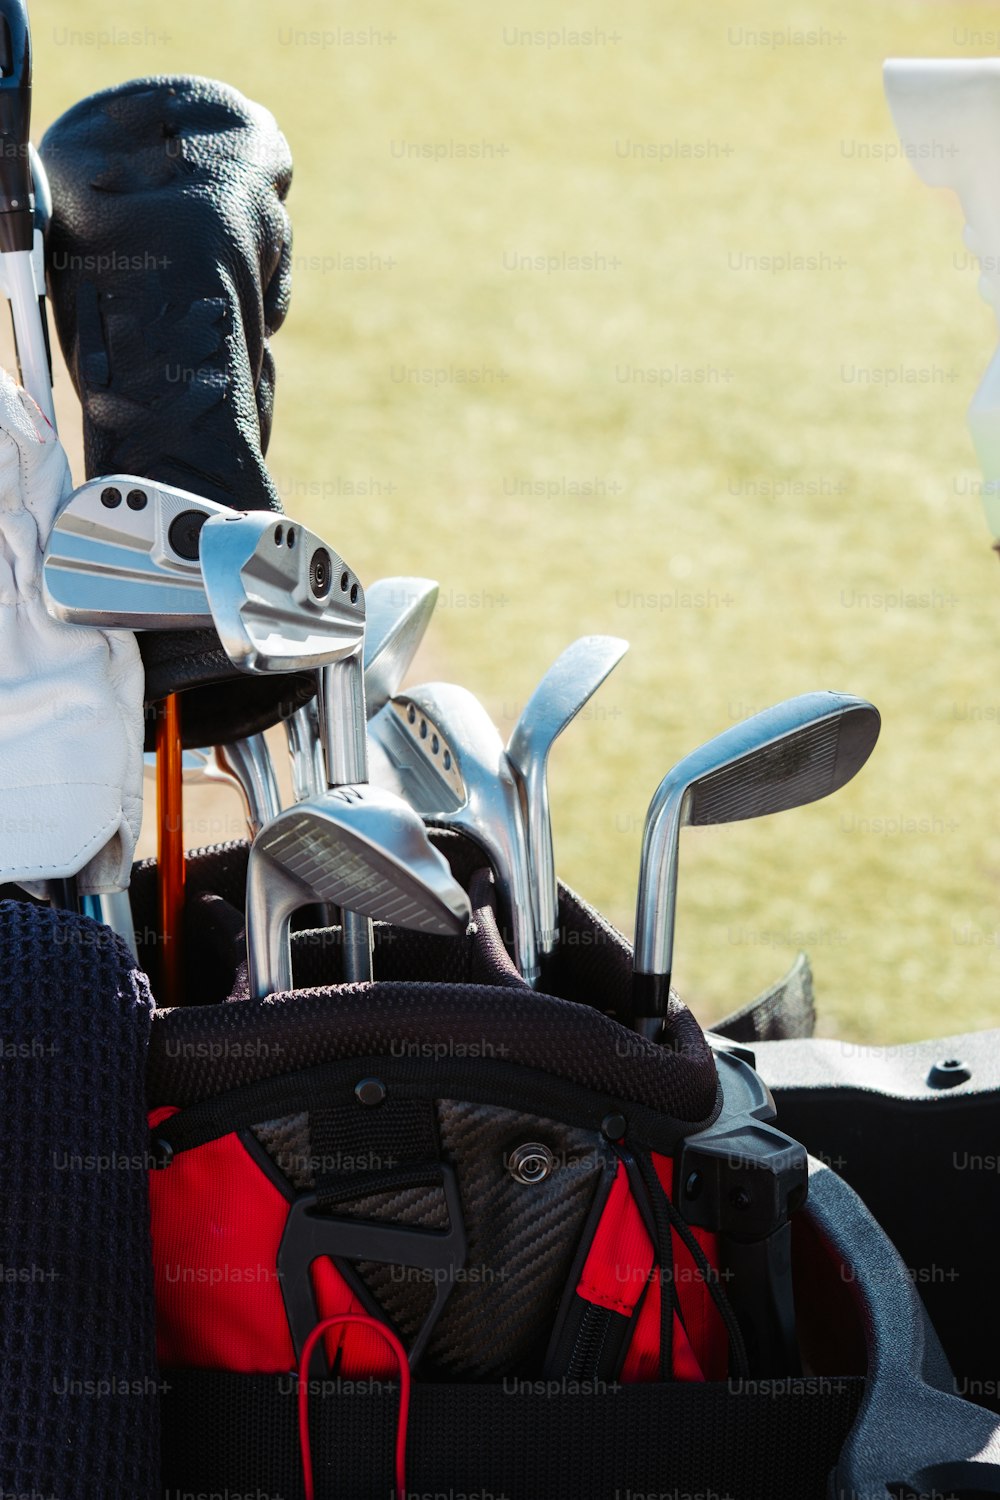 un sac de golf rempli de clubs de golf sur un terrain